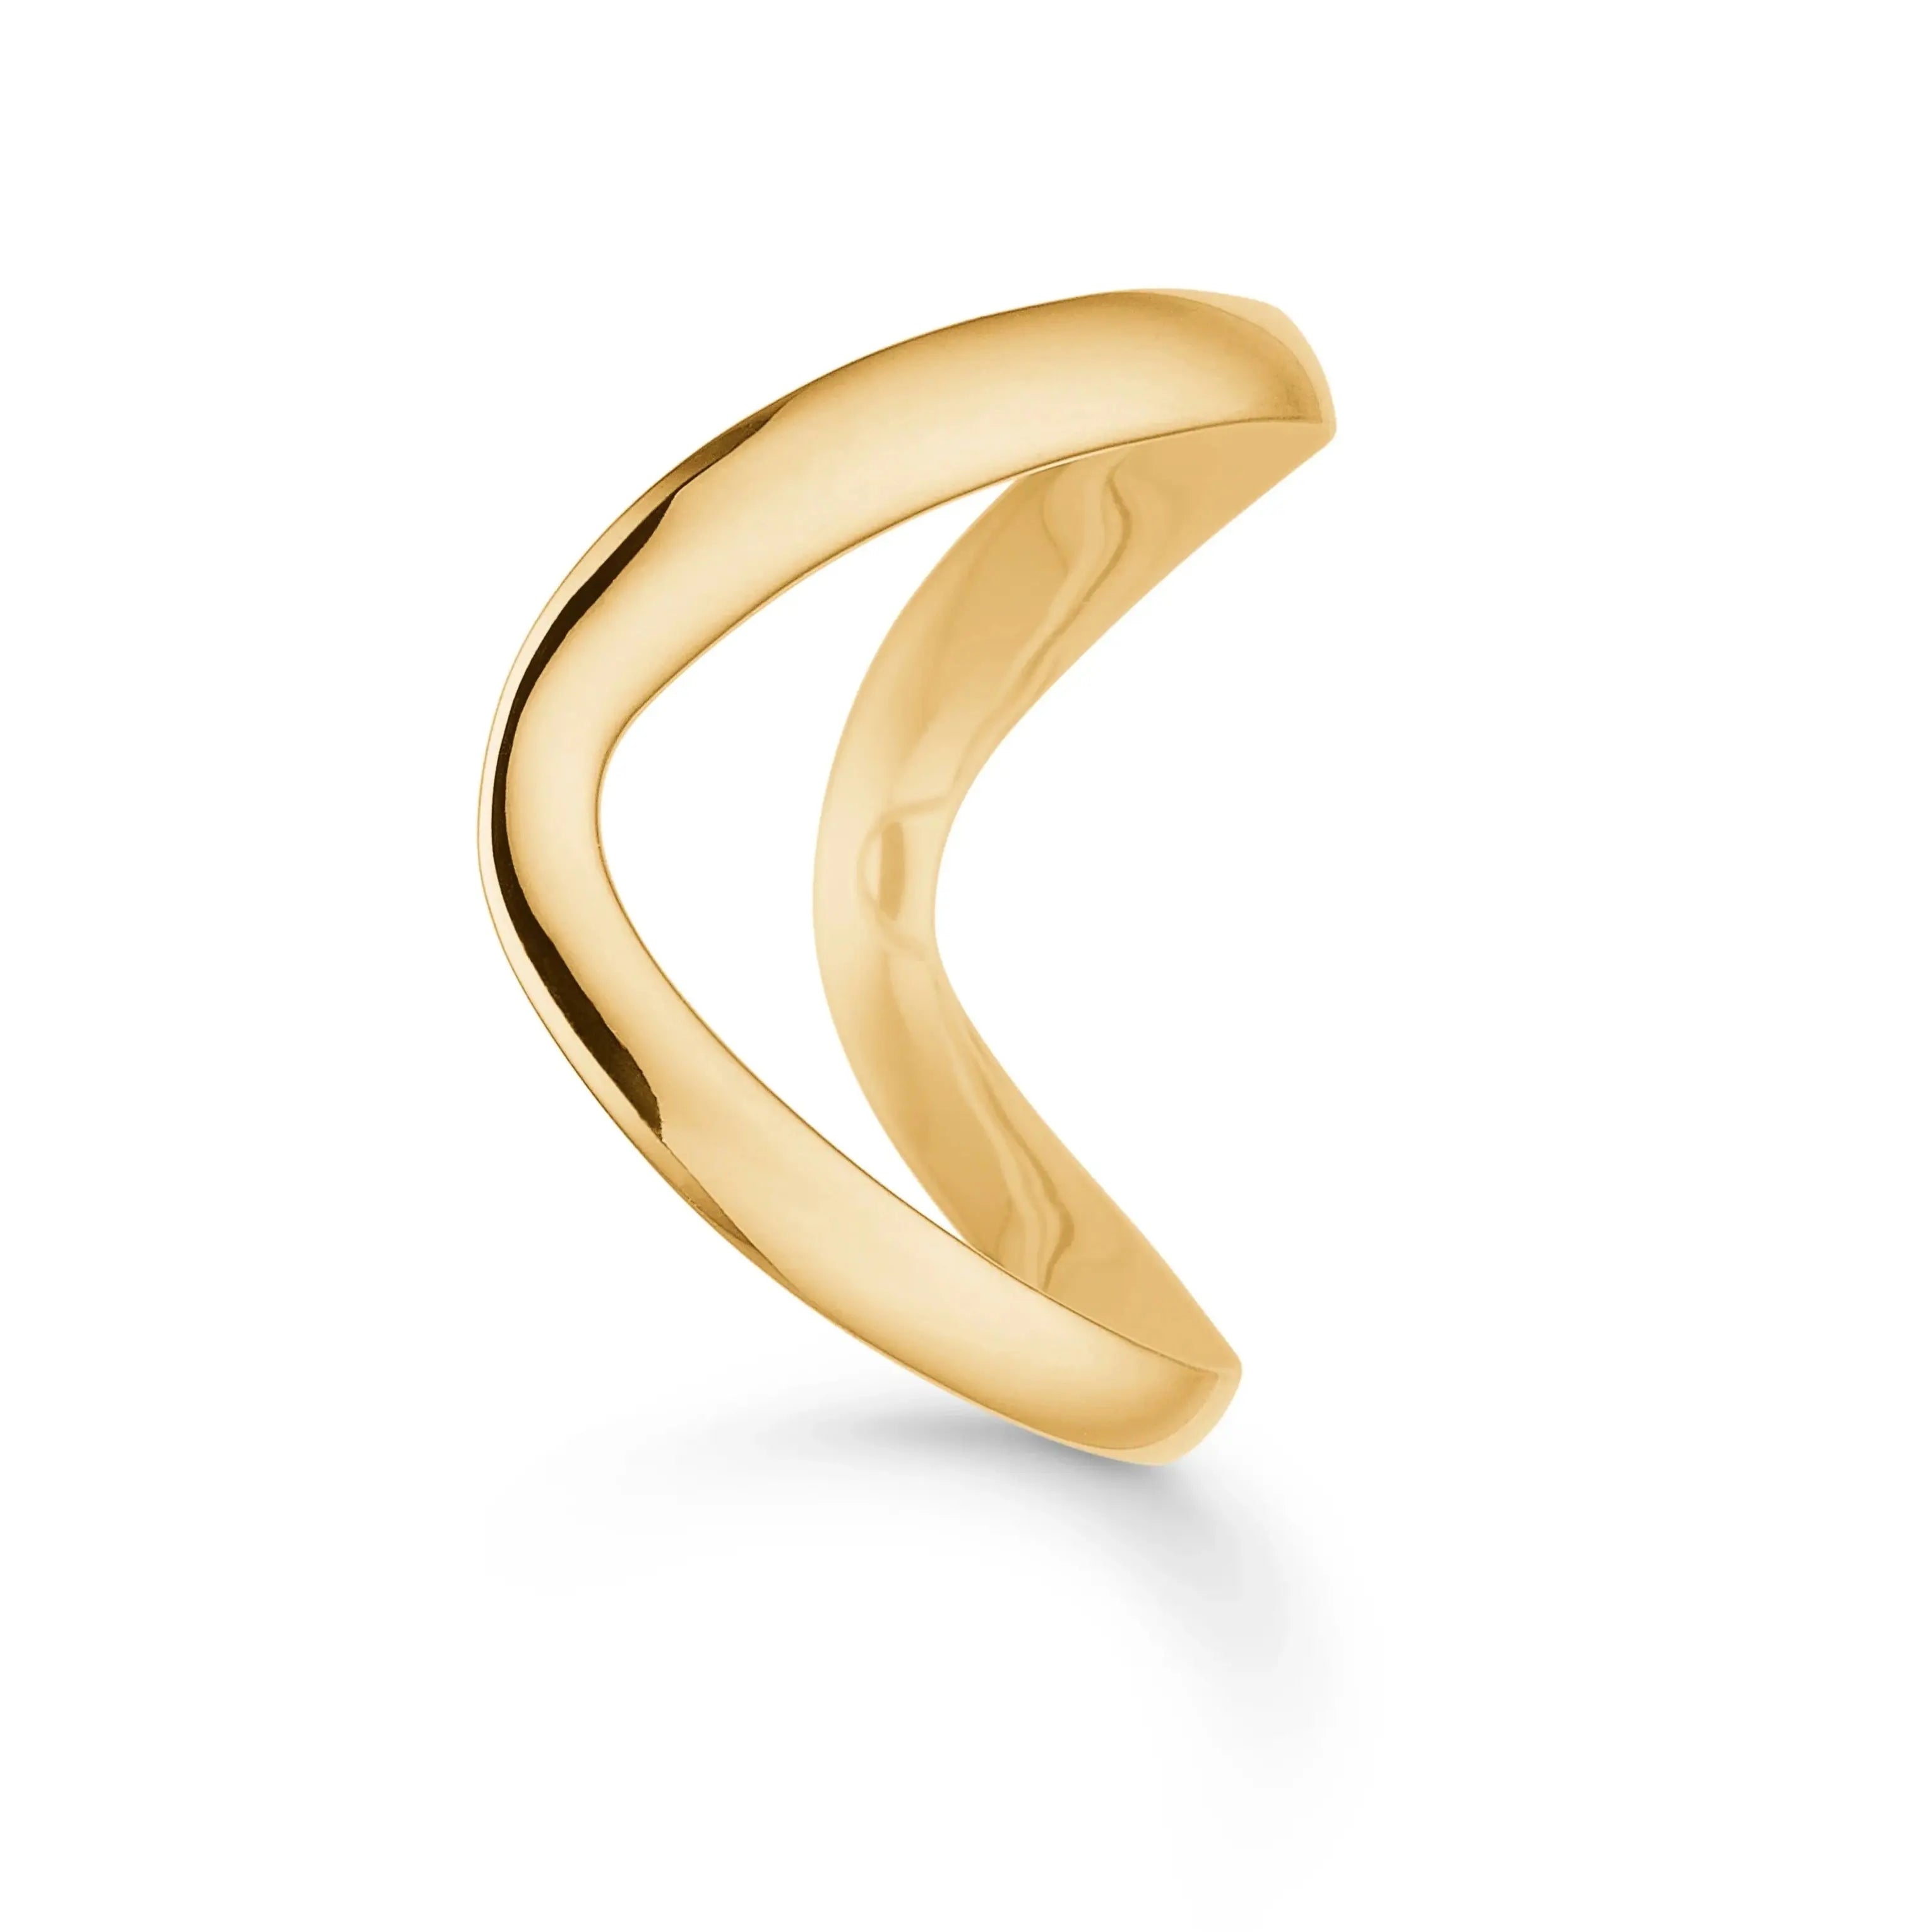 Boomerang ring - 8 kt. Guld fra Mads Z White Label Guld